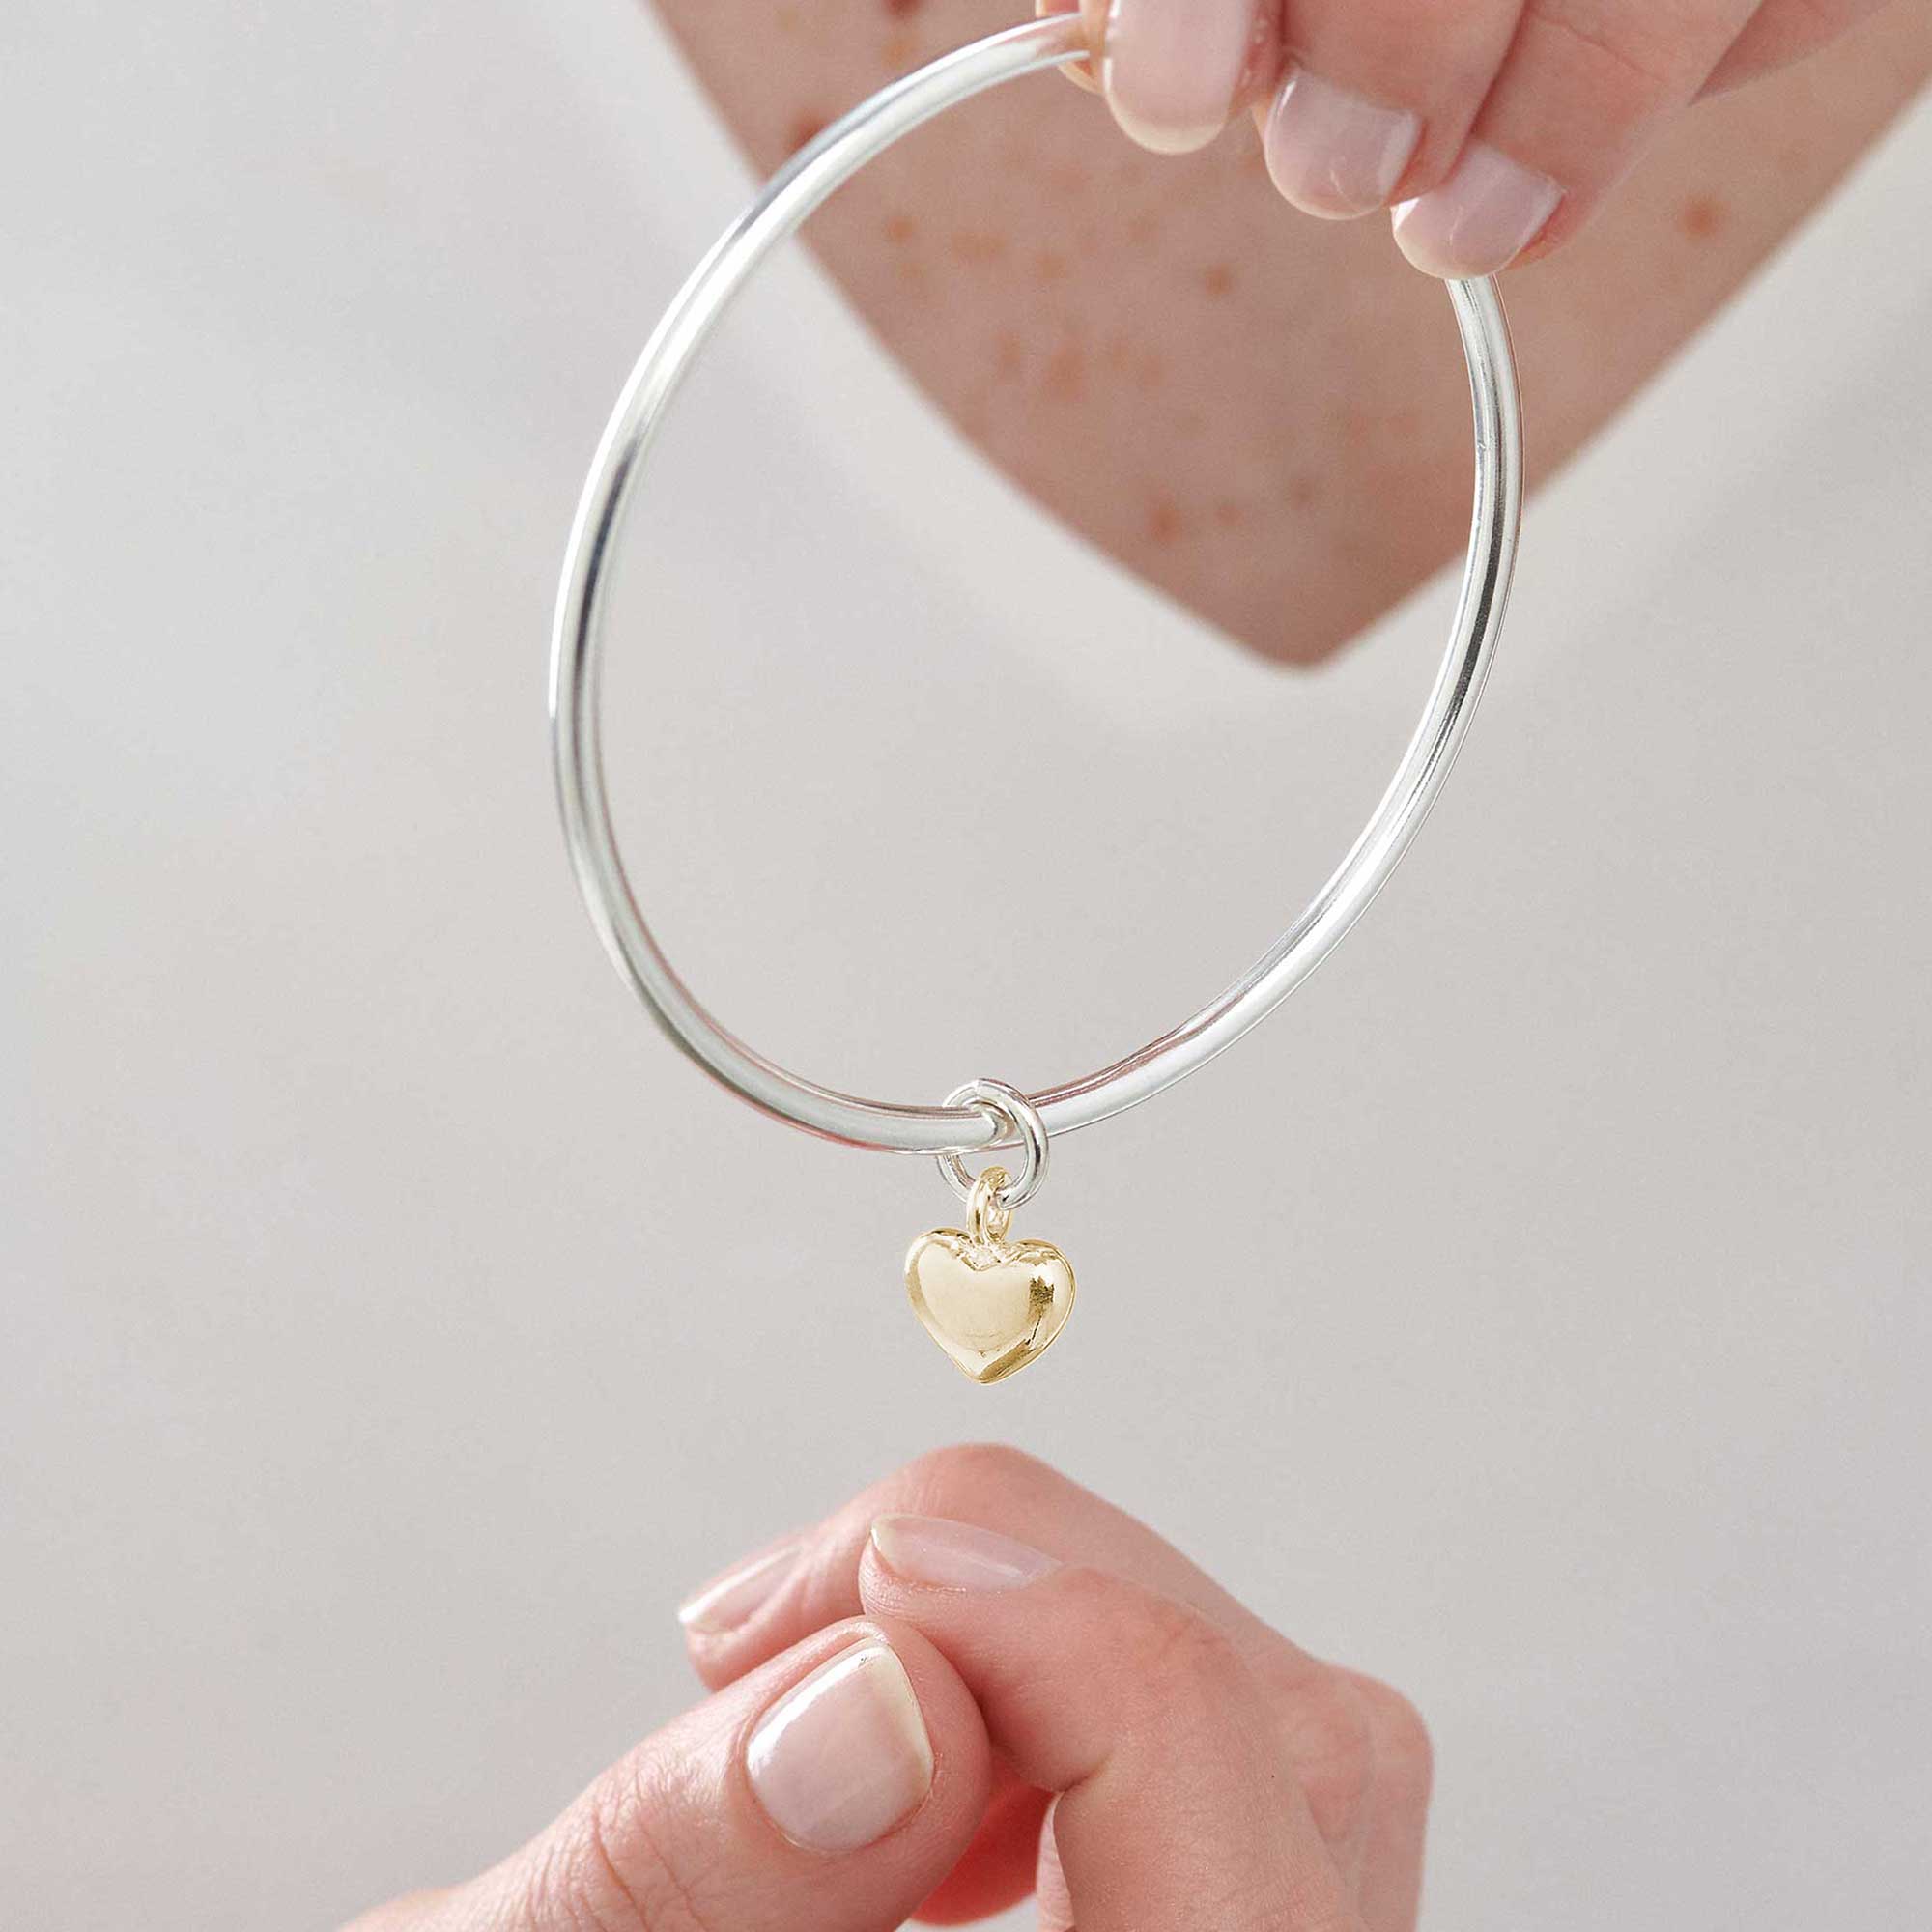 silver and solid 9ct gold heart charm bracelet bangle bracelet for women designer jewellery made in UK